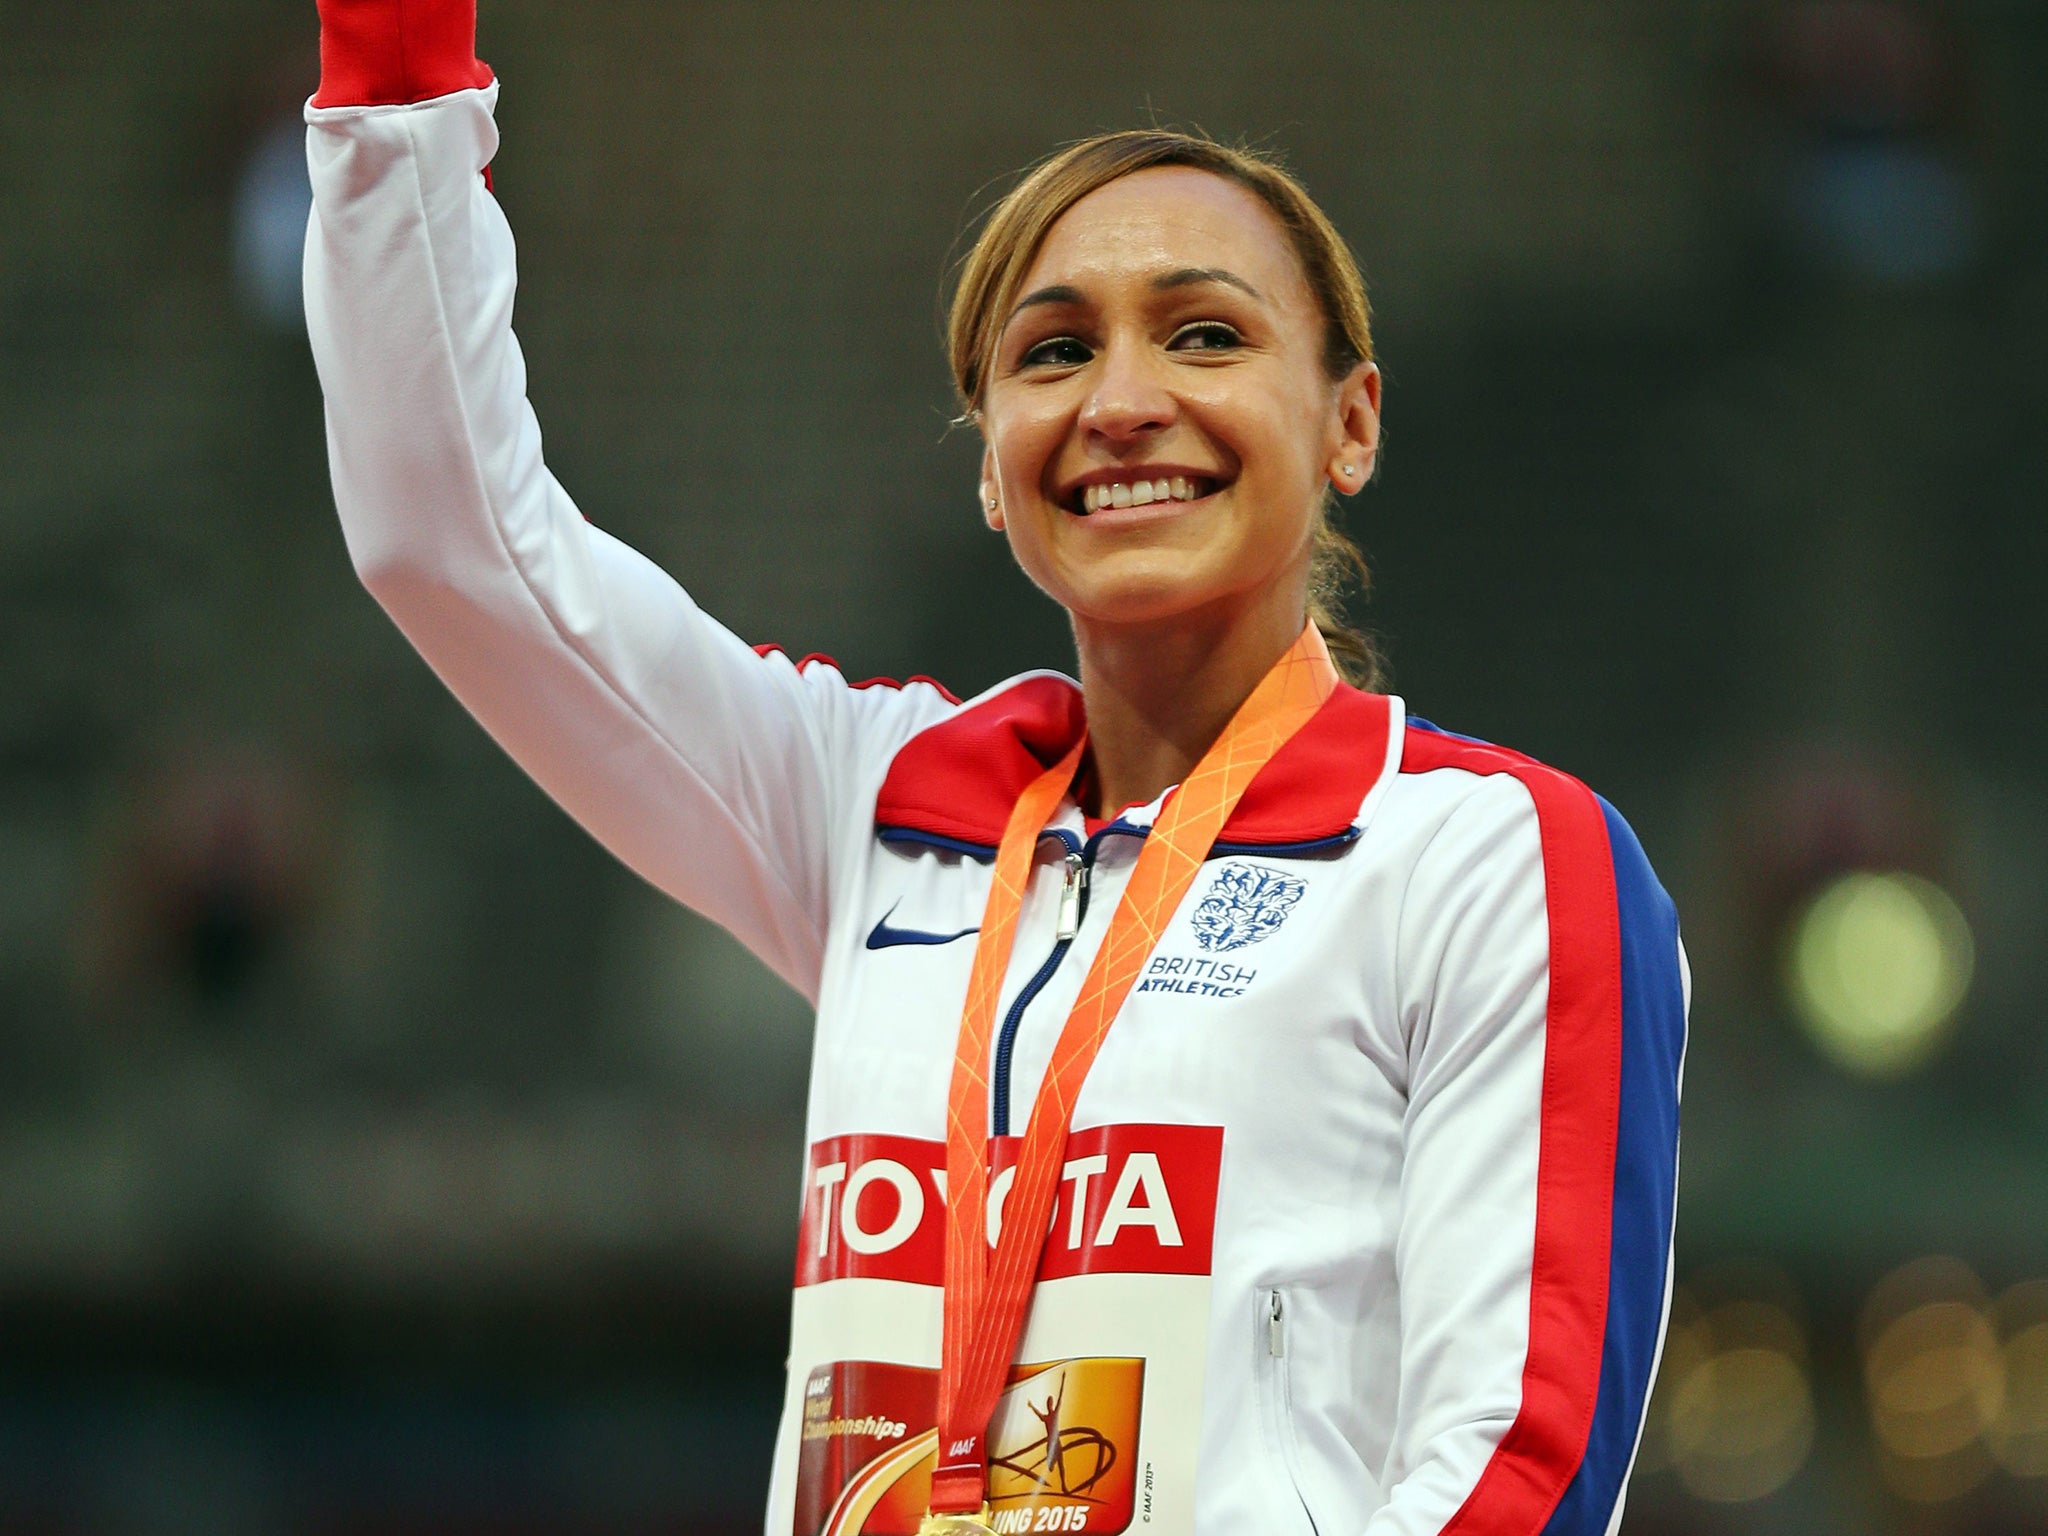 Jessica Ennis-Hill celebrates receiving her gold medal